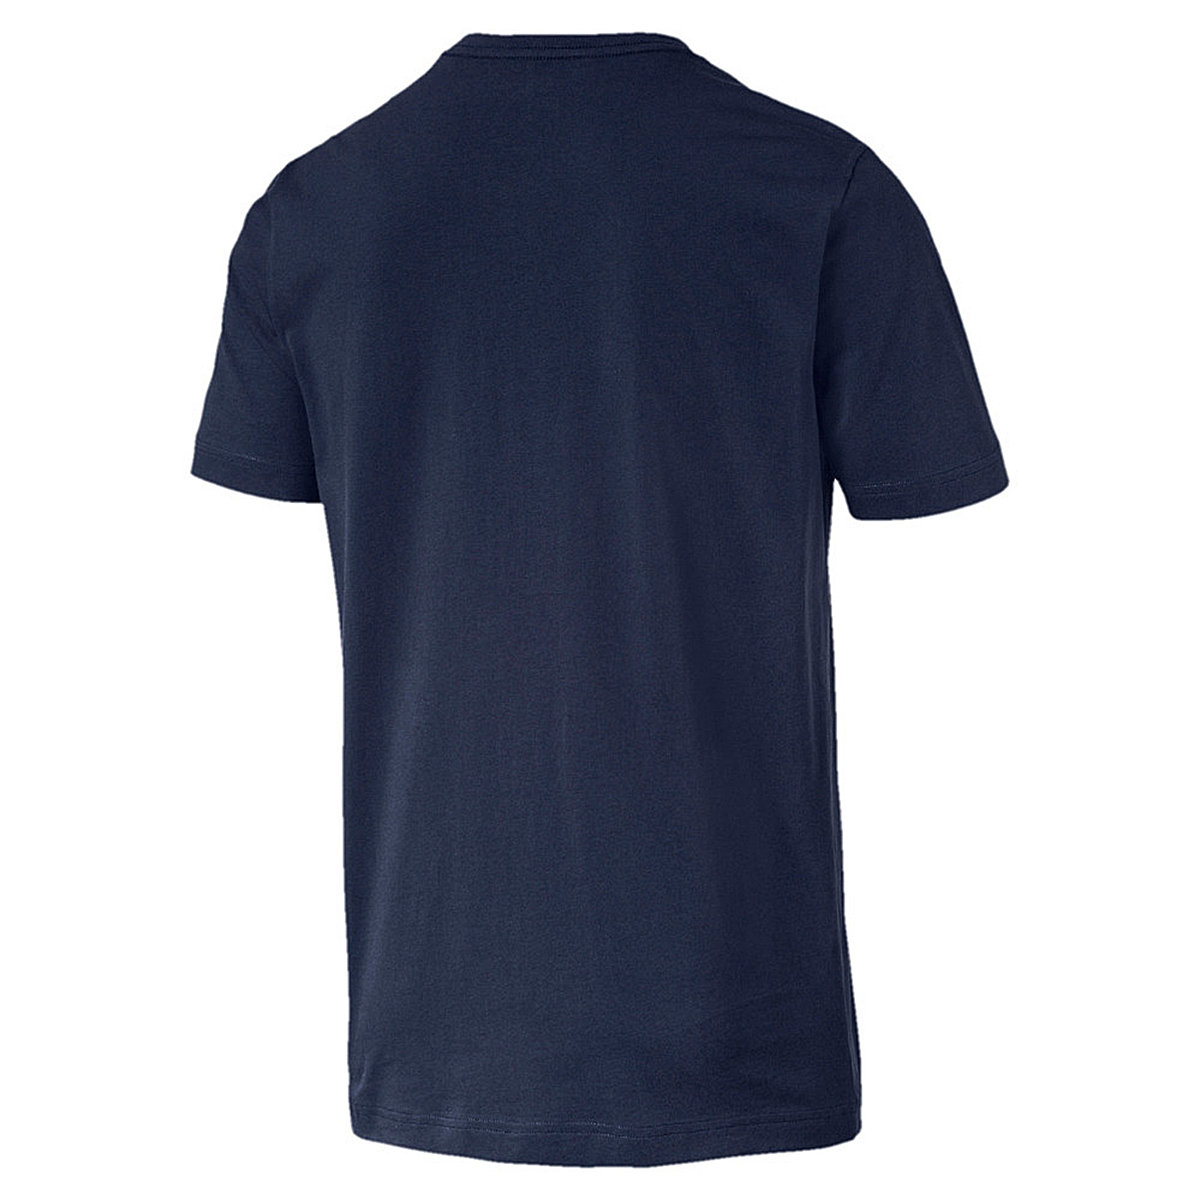 PUMA Herren ESS Essential Logo Tee T-Shirt blau